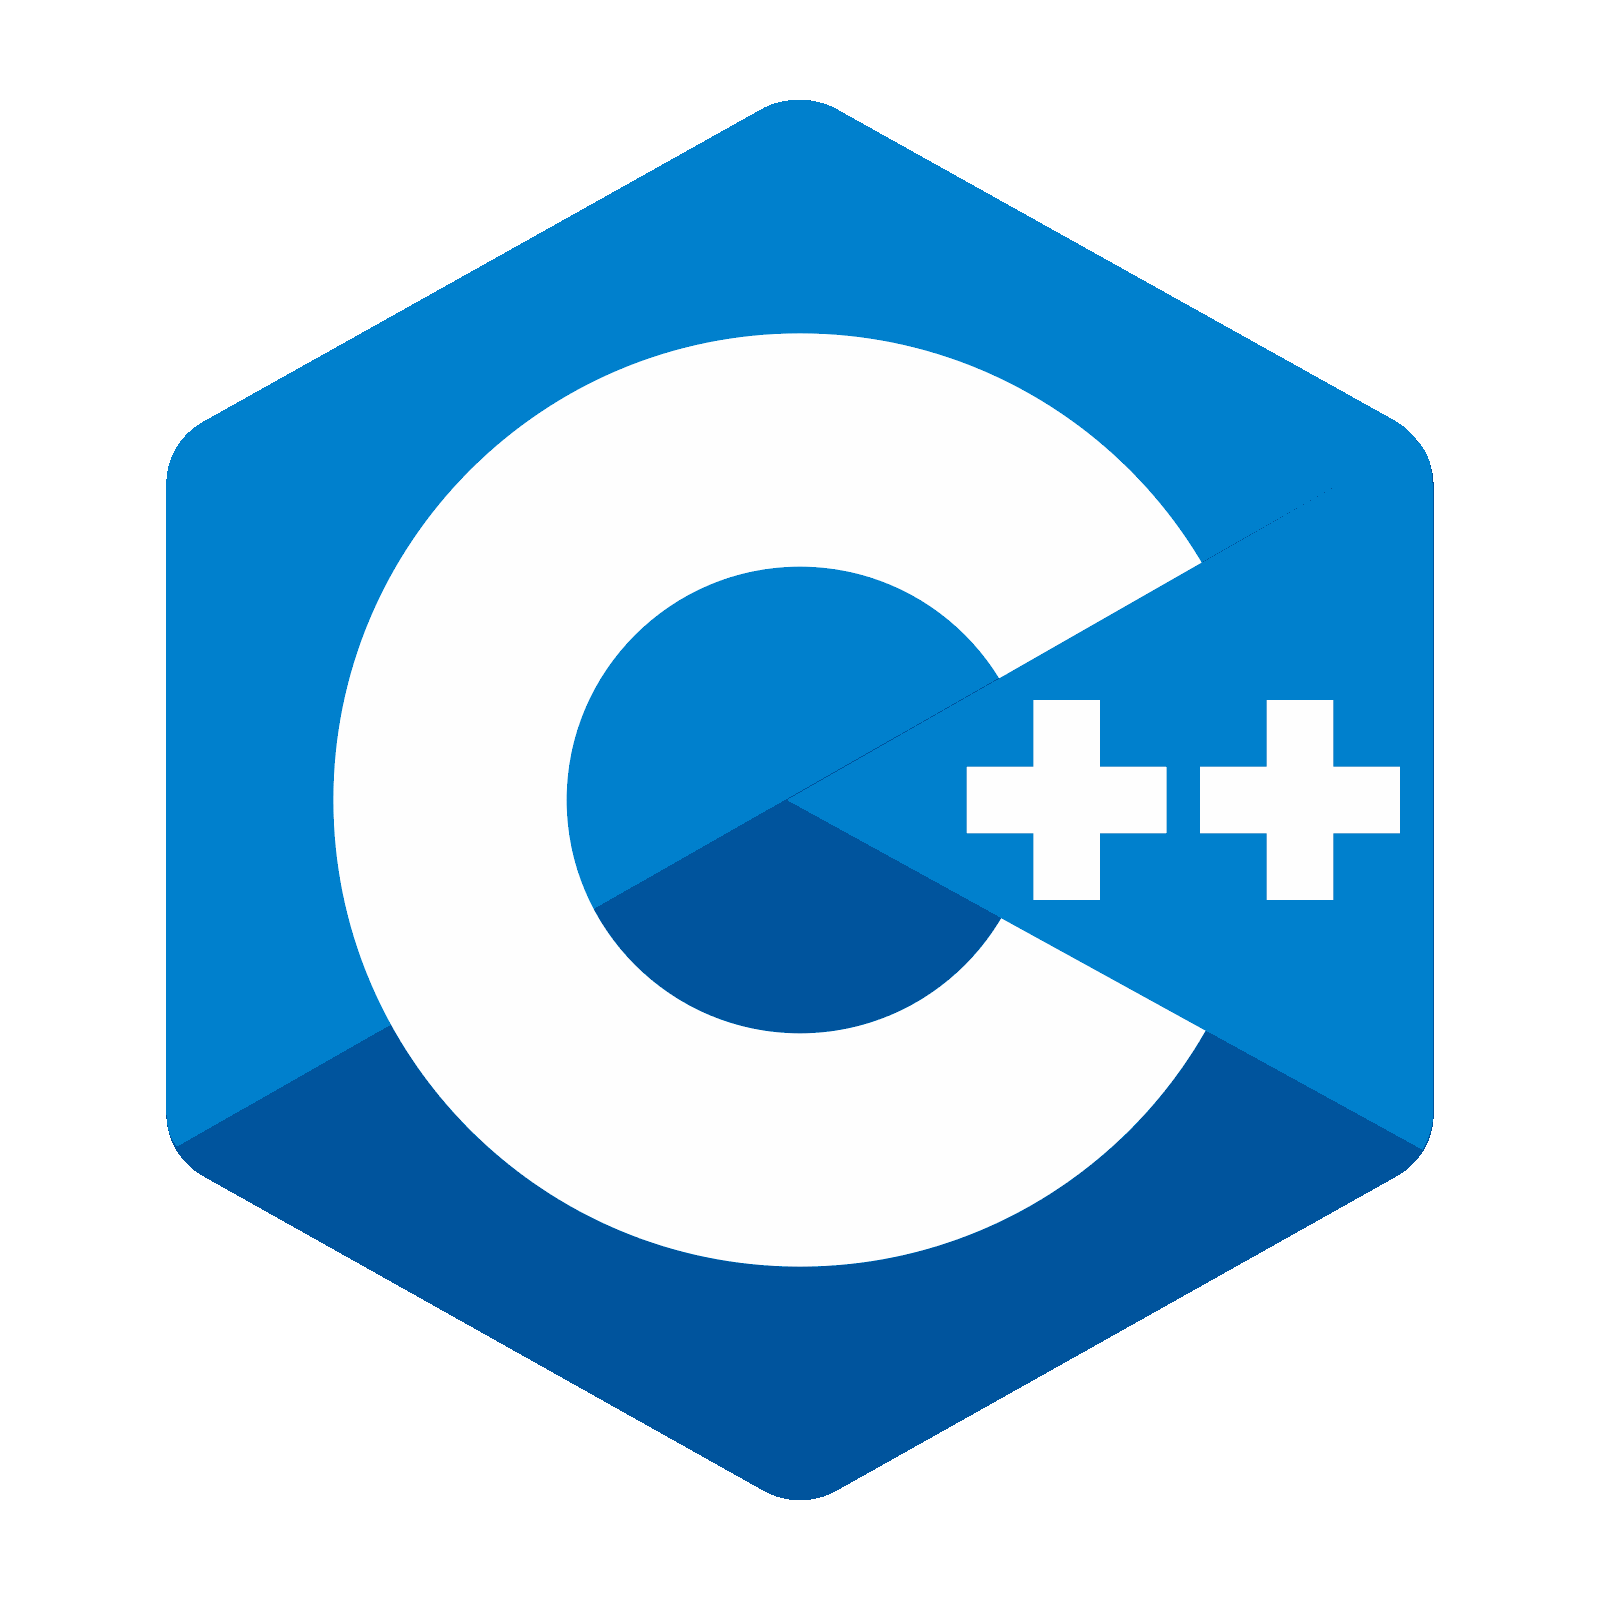 C++ and Qt